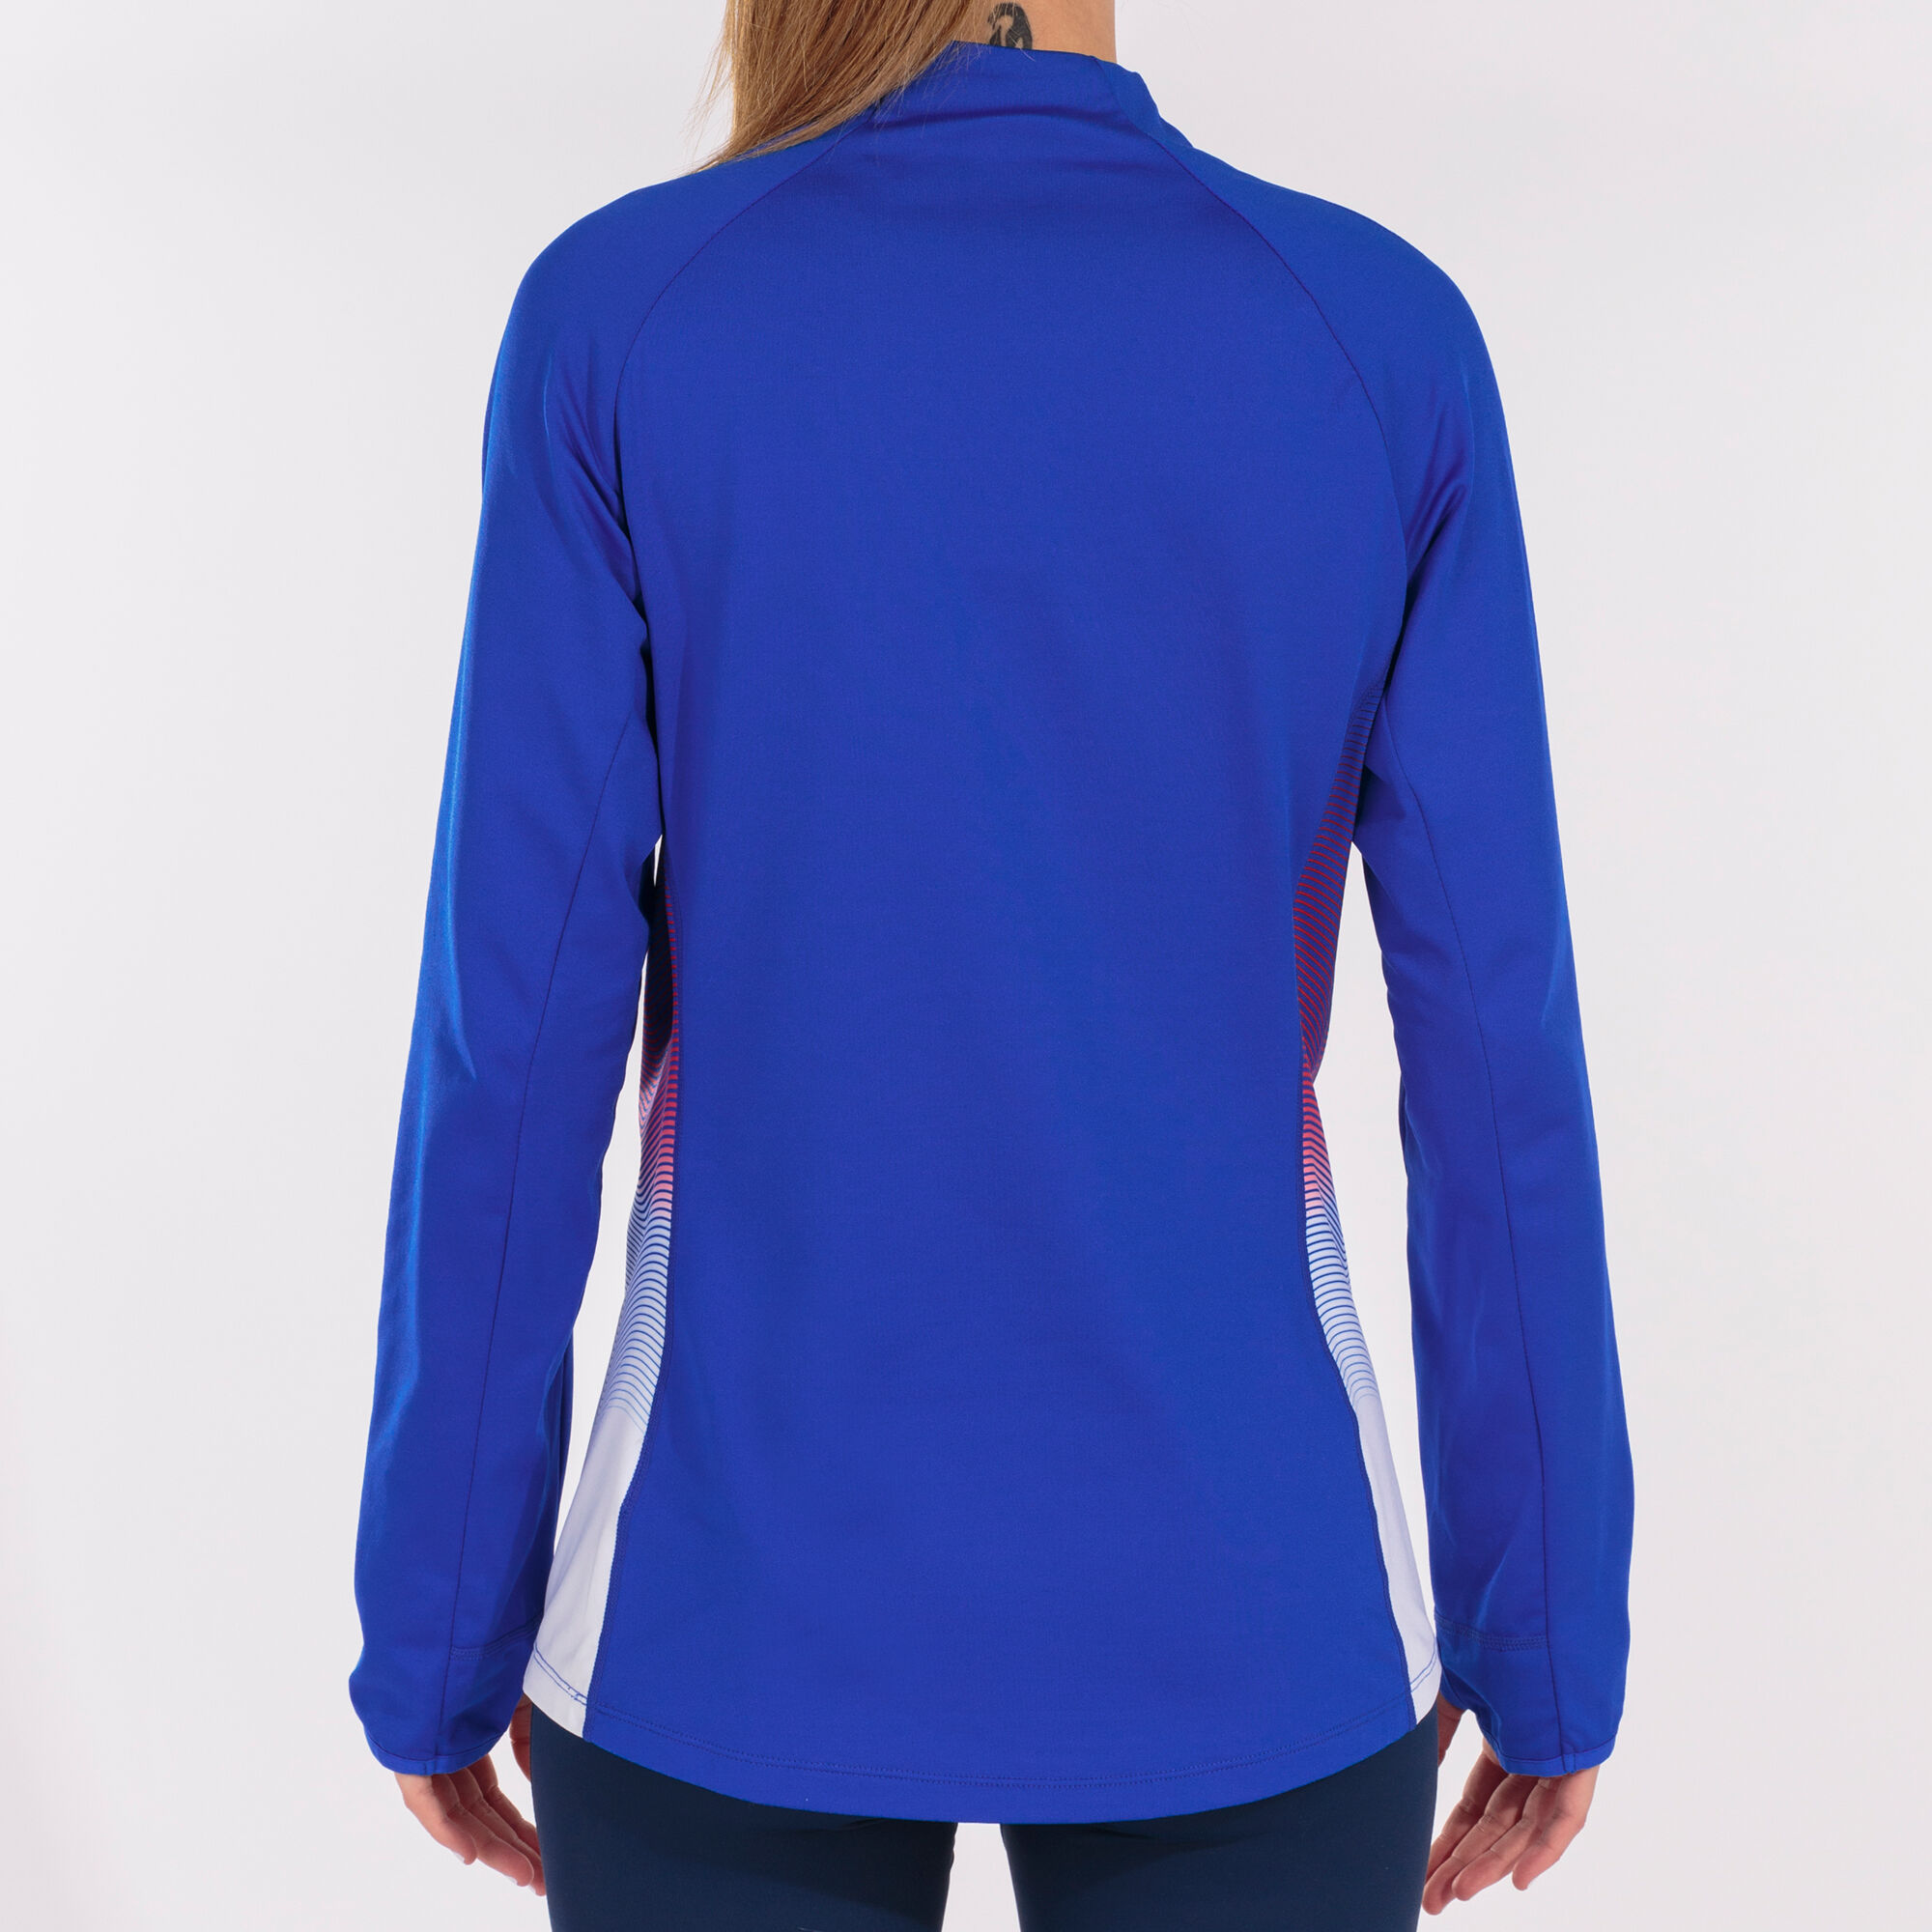 Joma Women's Elite Vii Running sweatshirt 